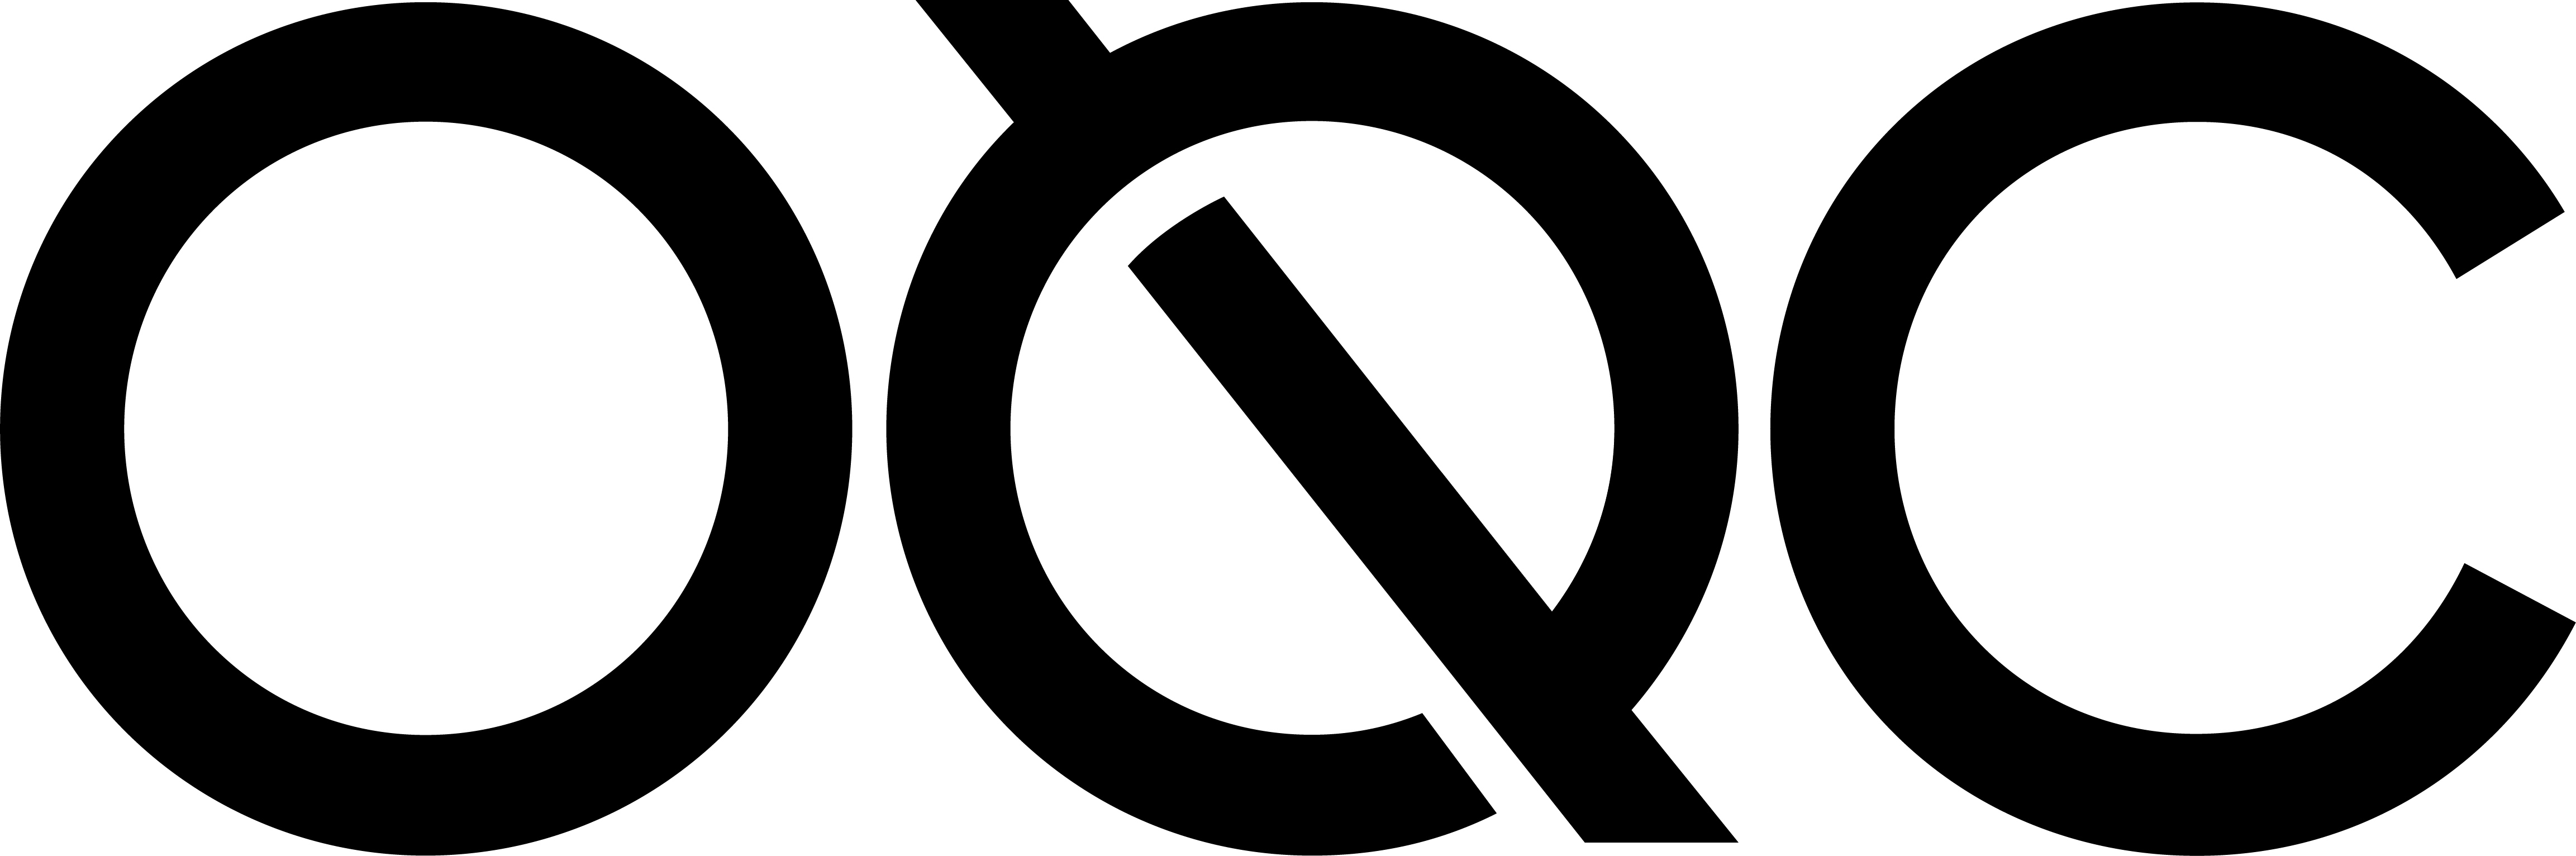 OQC Logo - Black@4x